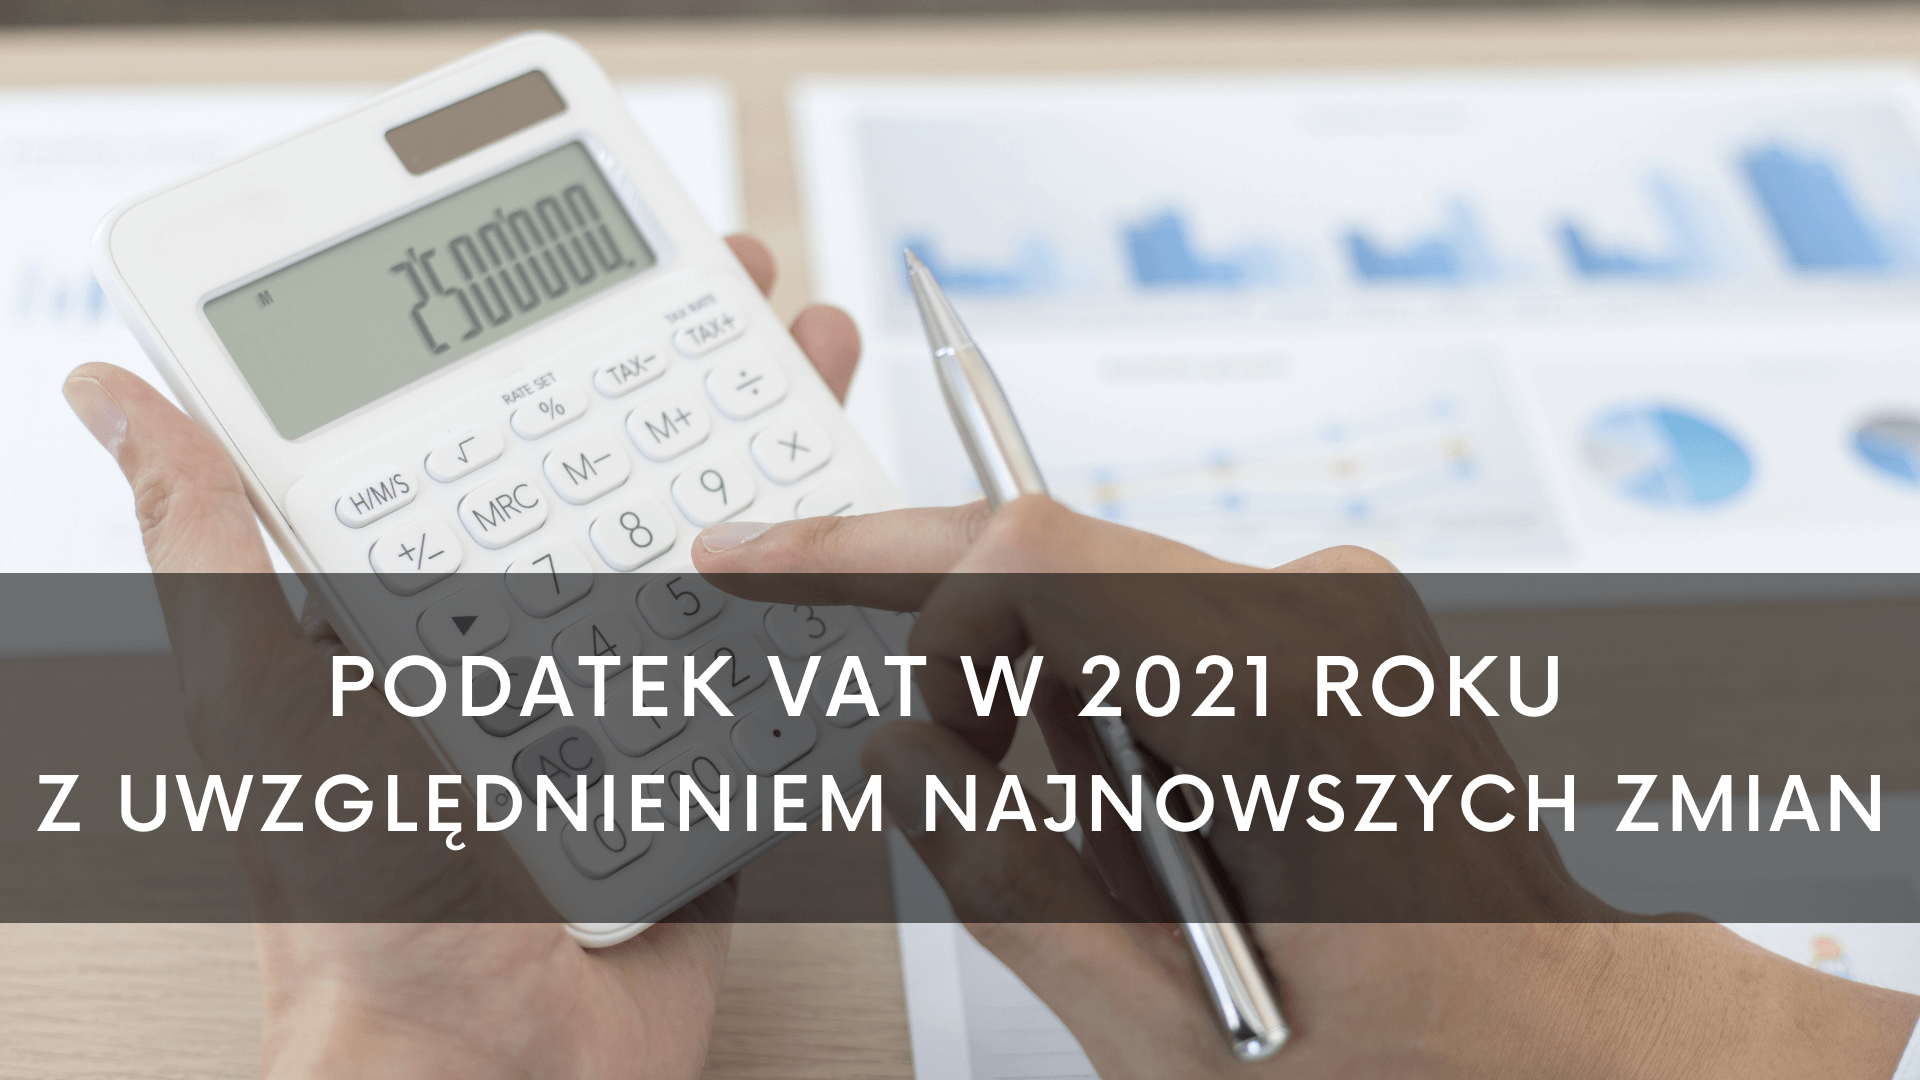 Zmiany w podatku VAT grafika 2